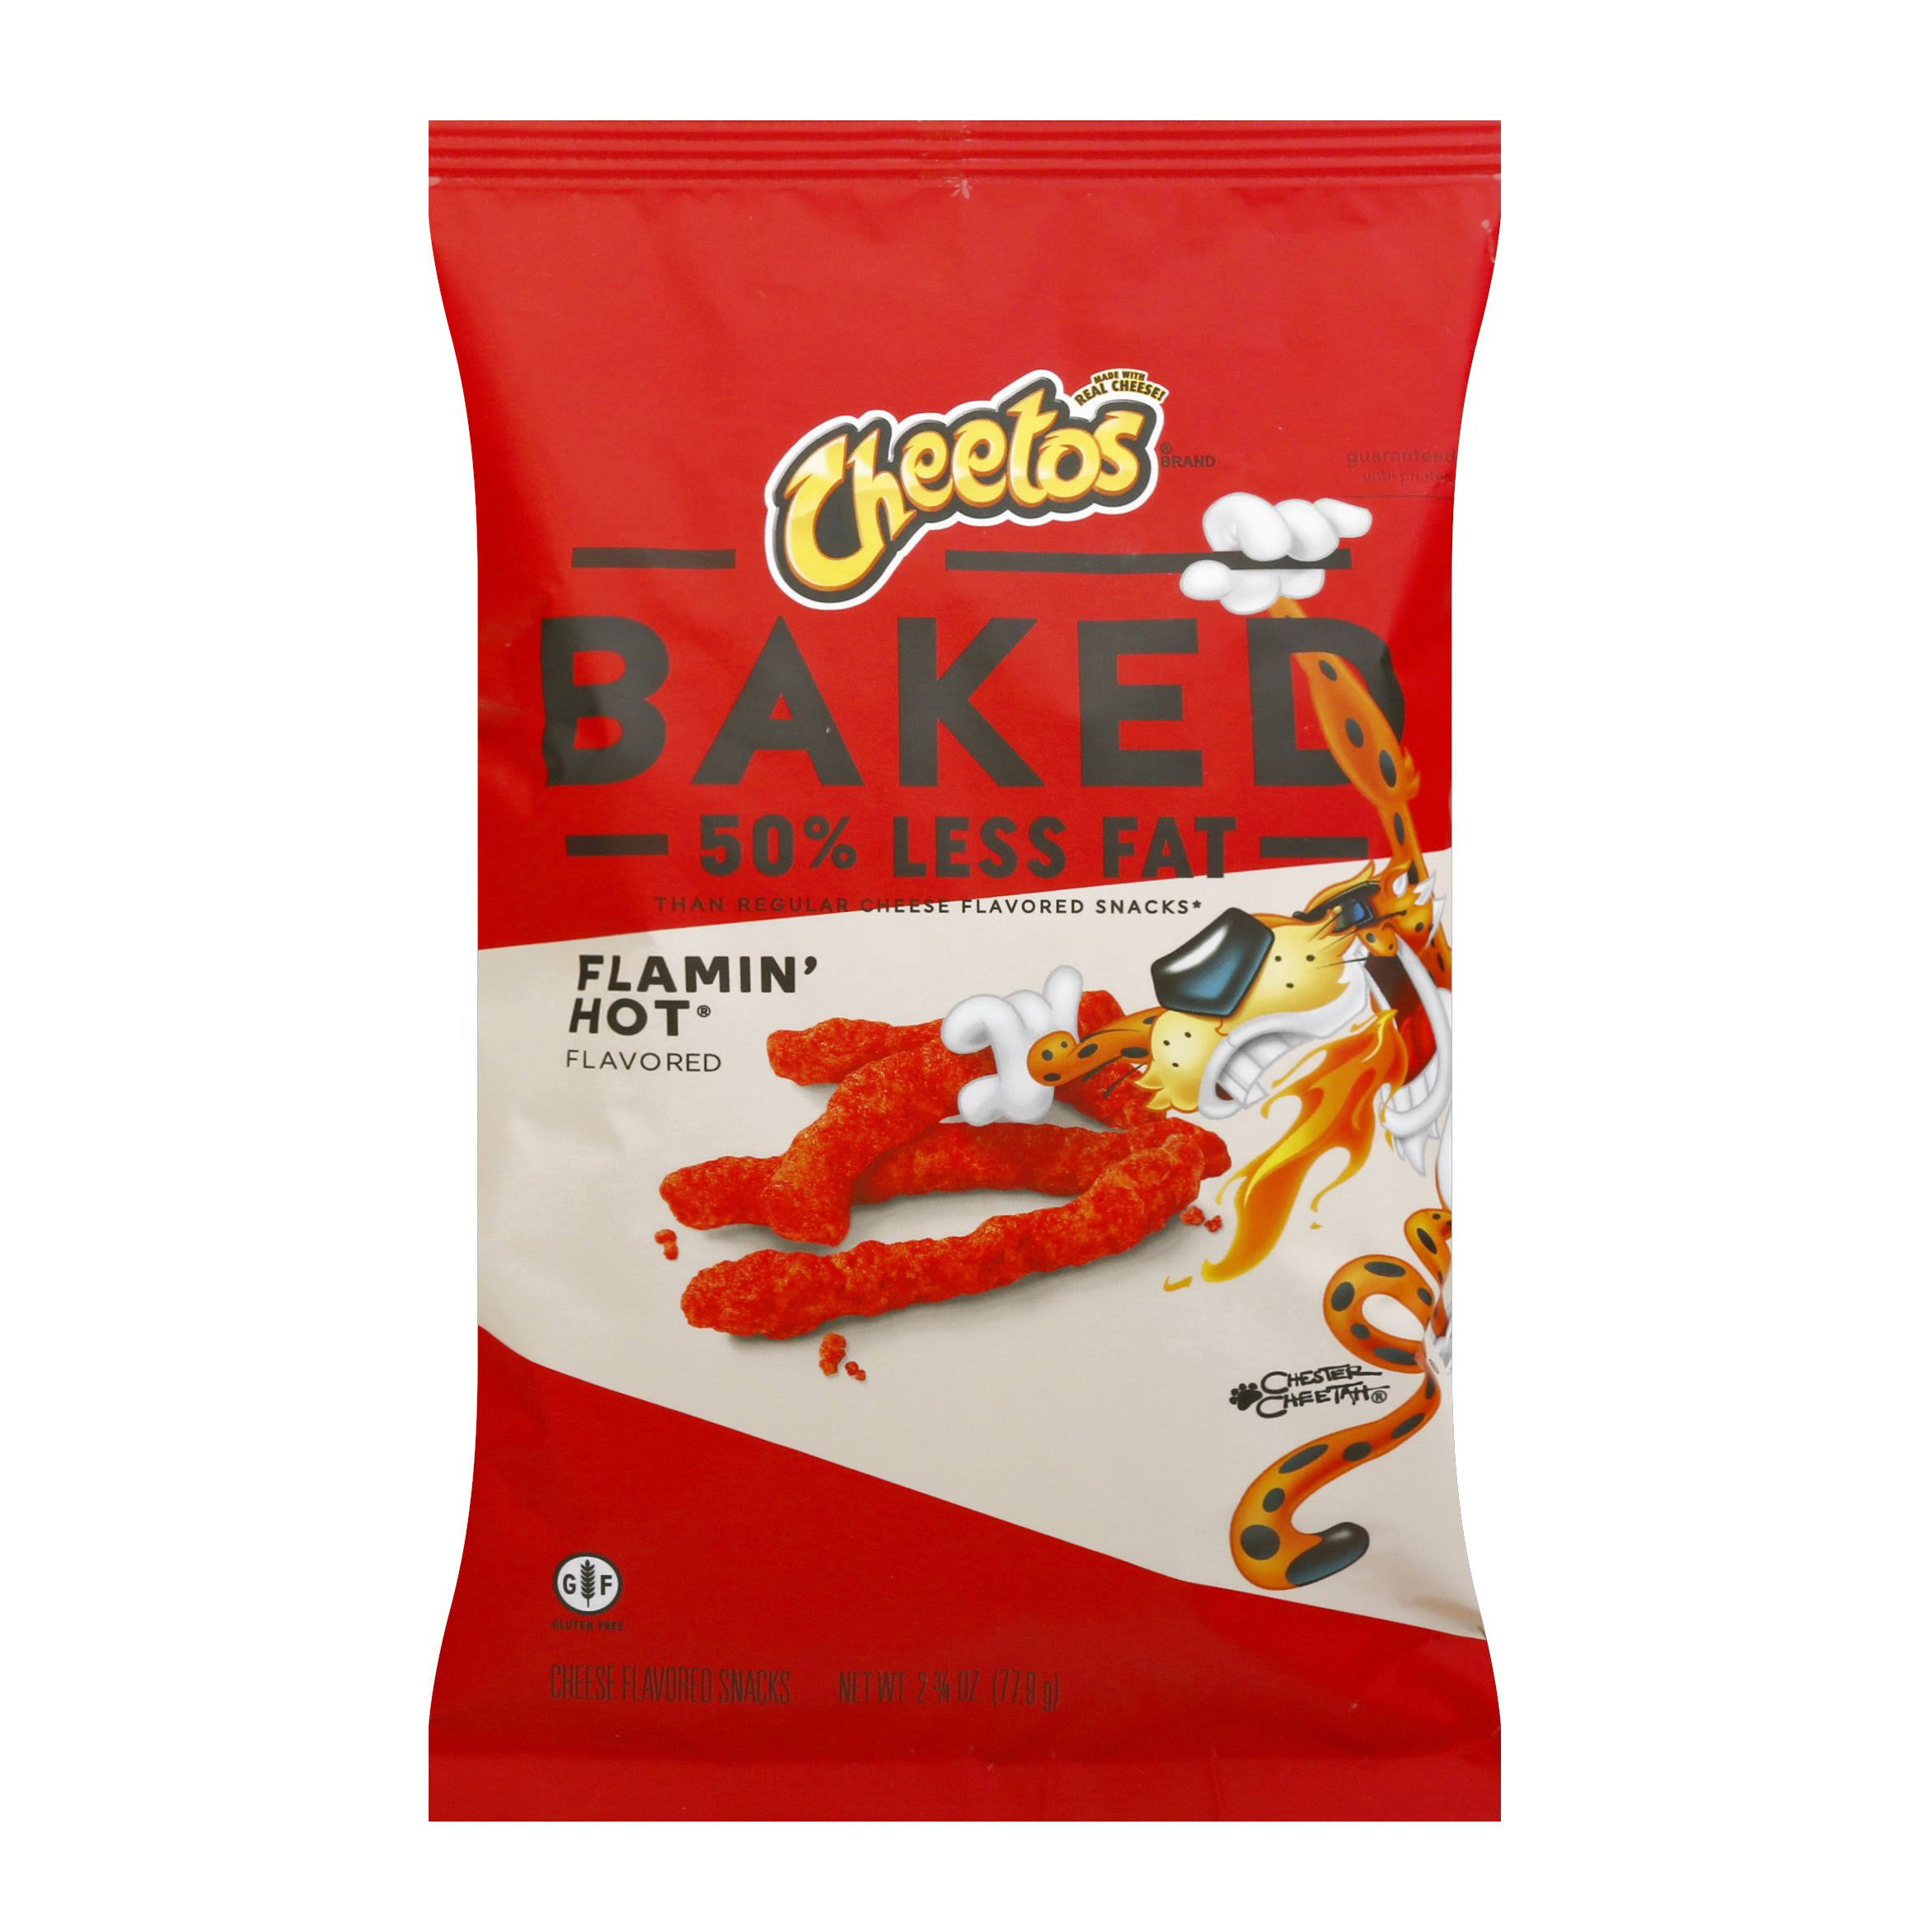 Cheetos Baked Cheese Flavored Snacks Flamin' Hot - 2.75 oz